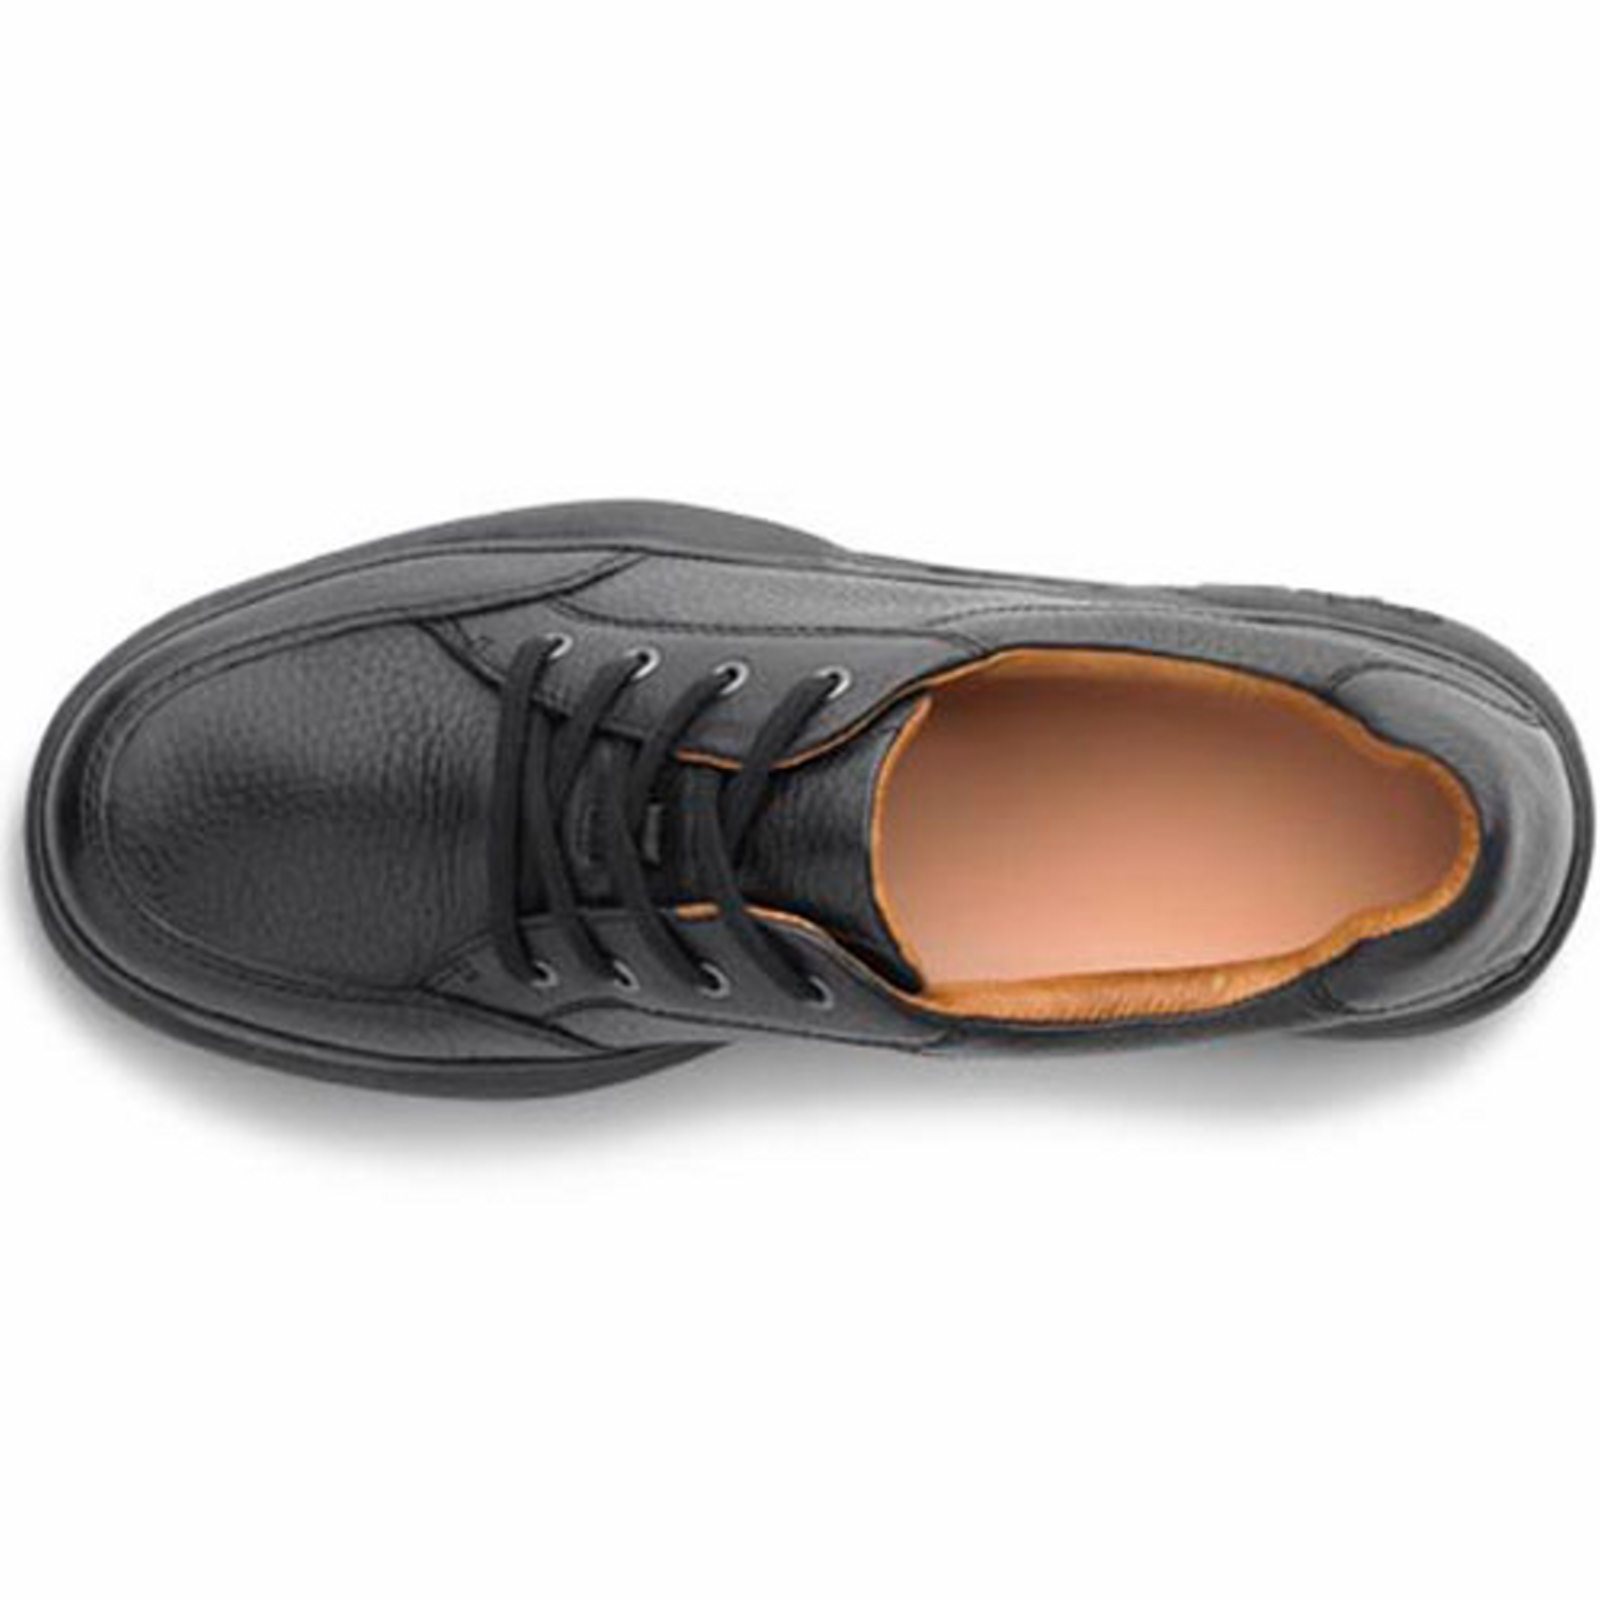 Dr. Comfort Justin Men's Casual Shoe: 7.5 X-Wide (3E/4E) Black Lace - image 5 of 5